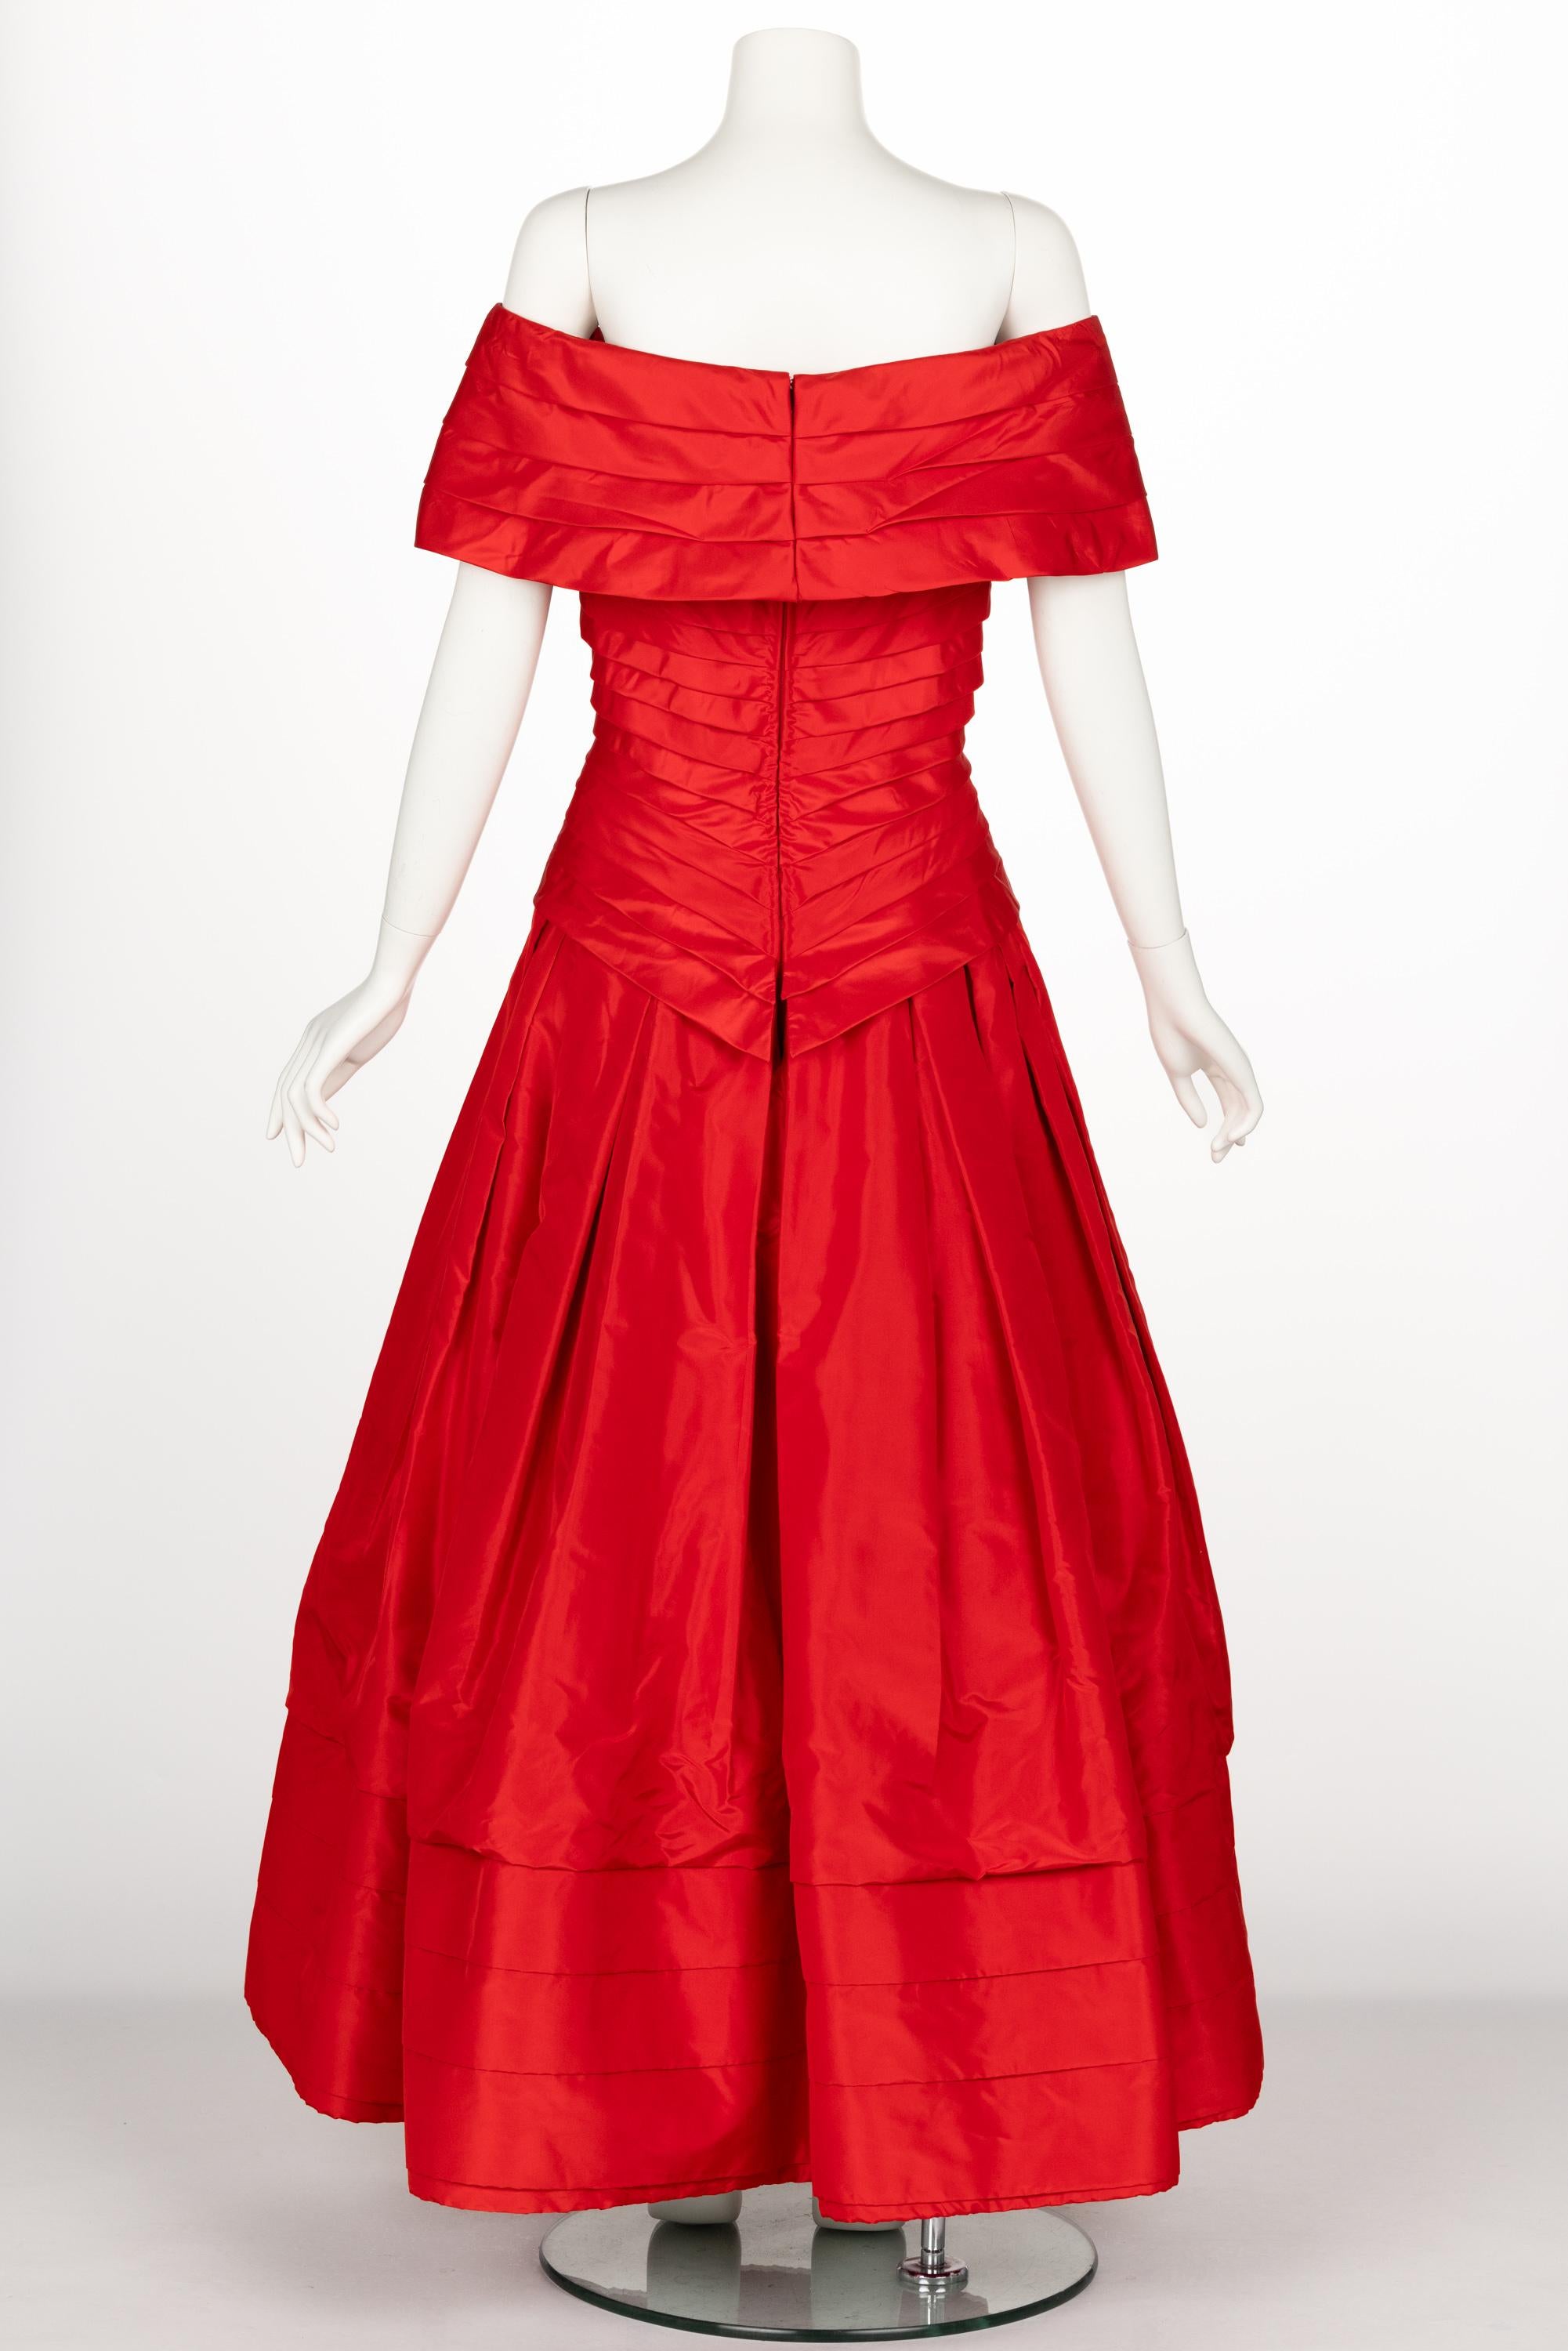 Sensational Scaasi 1980s Red Off The Shoulder Dress For Sale 1